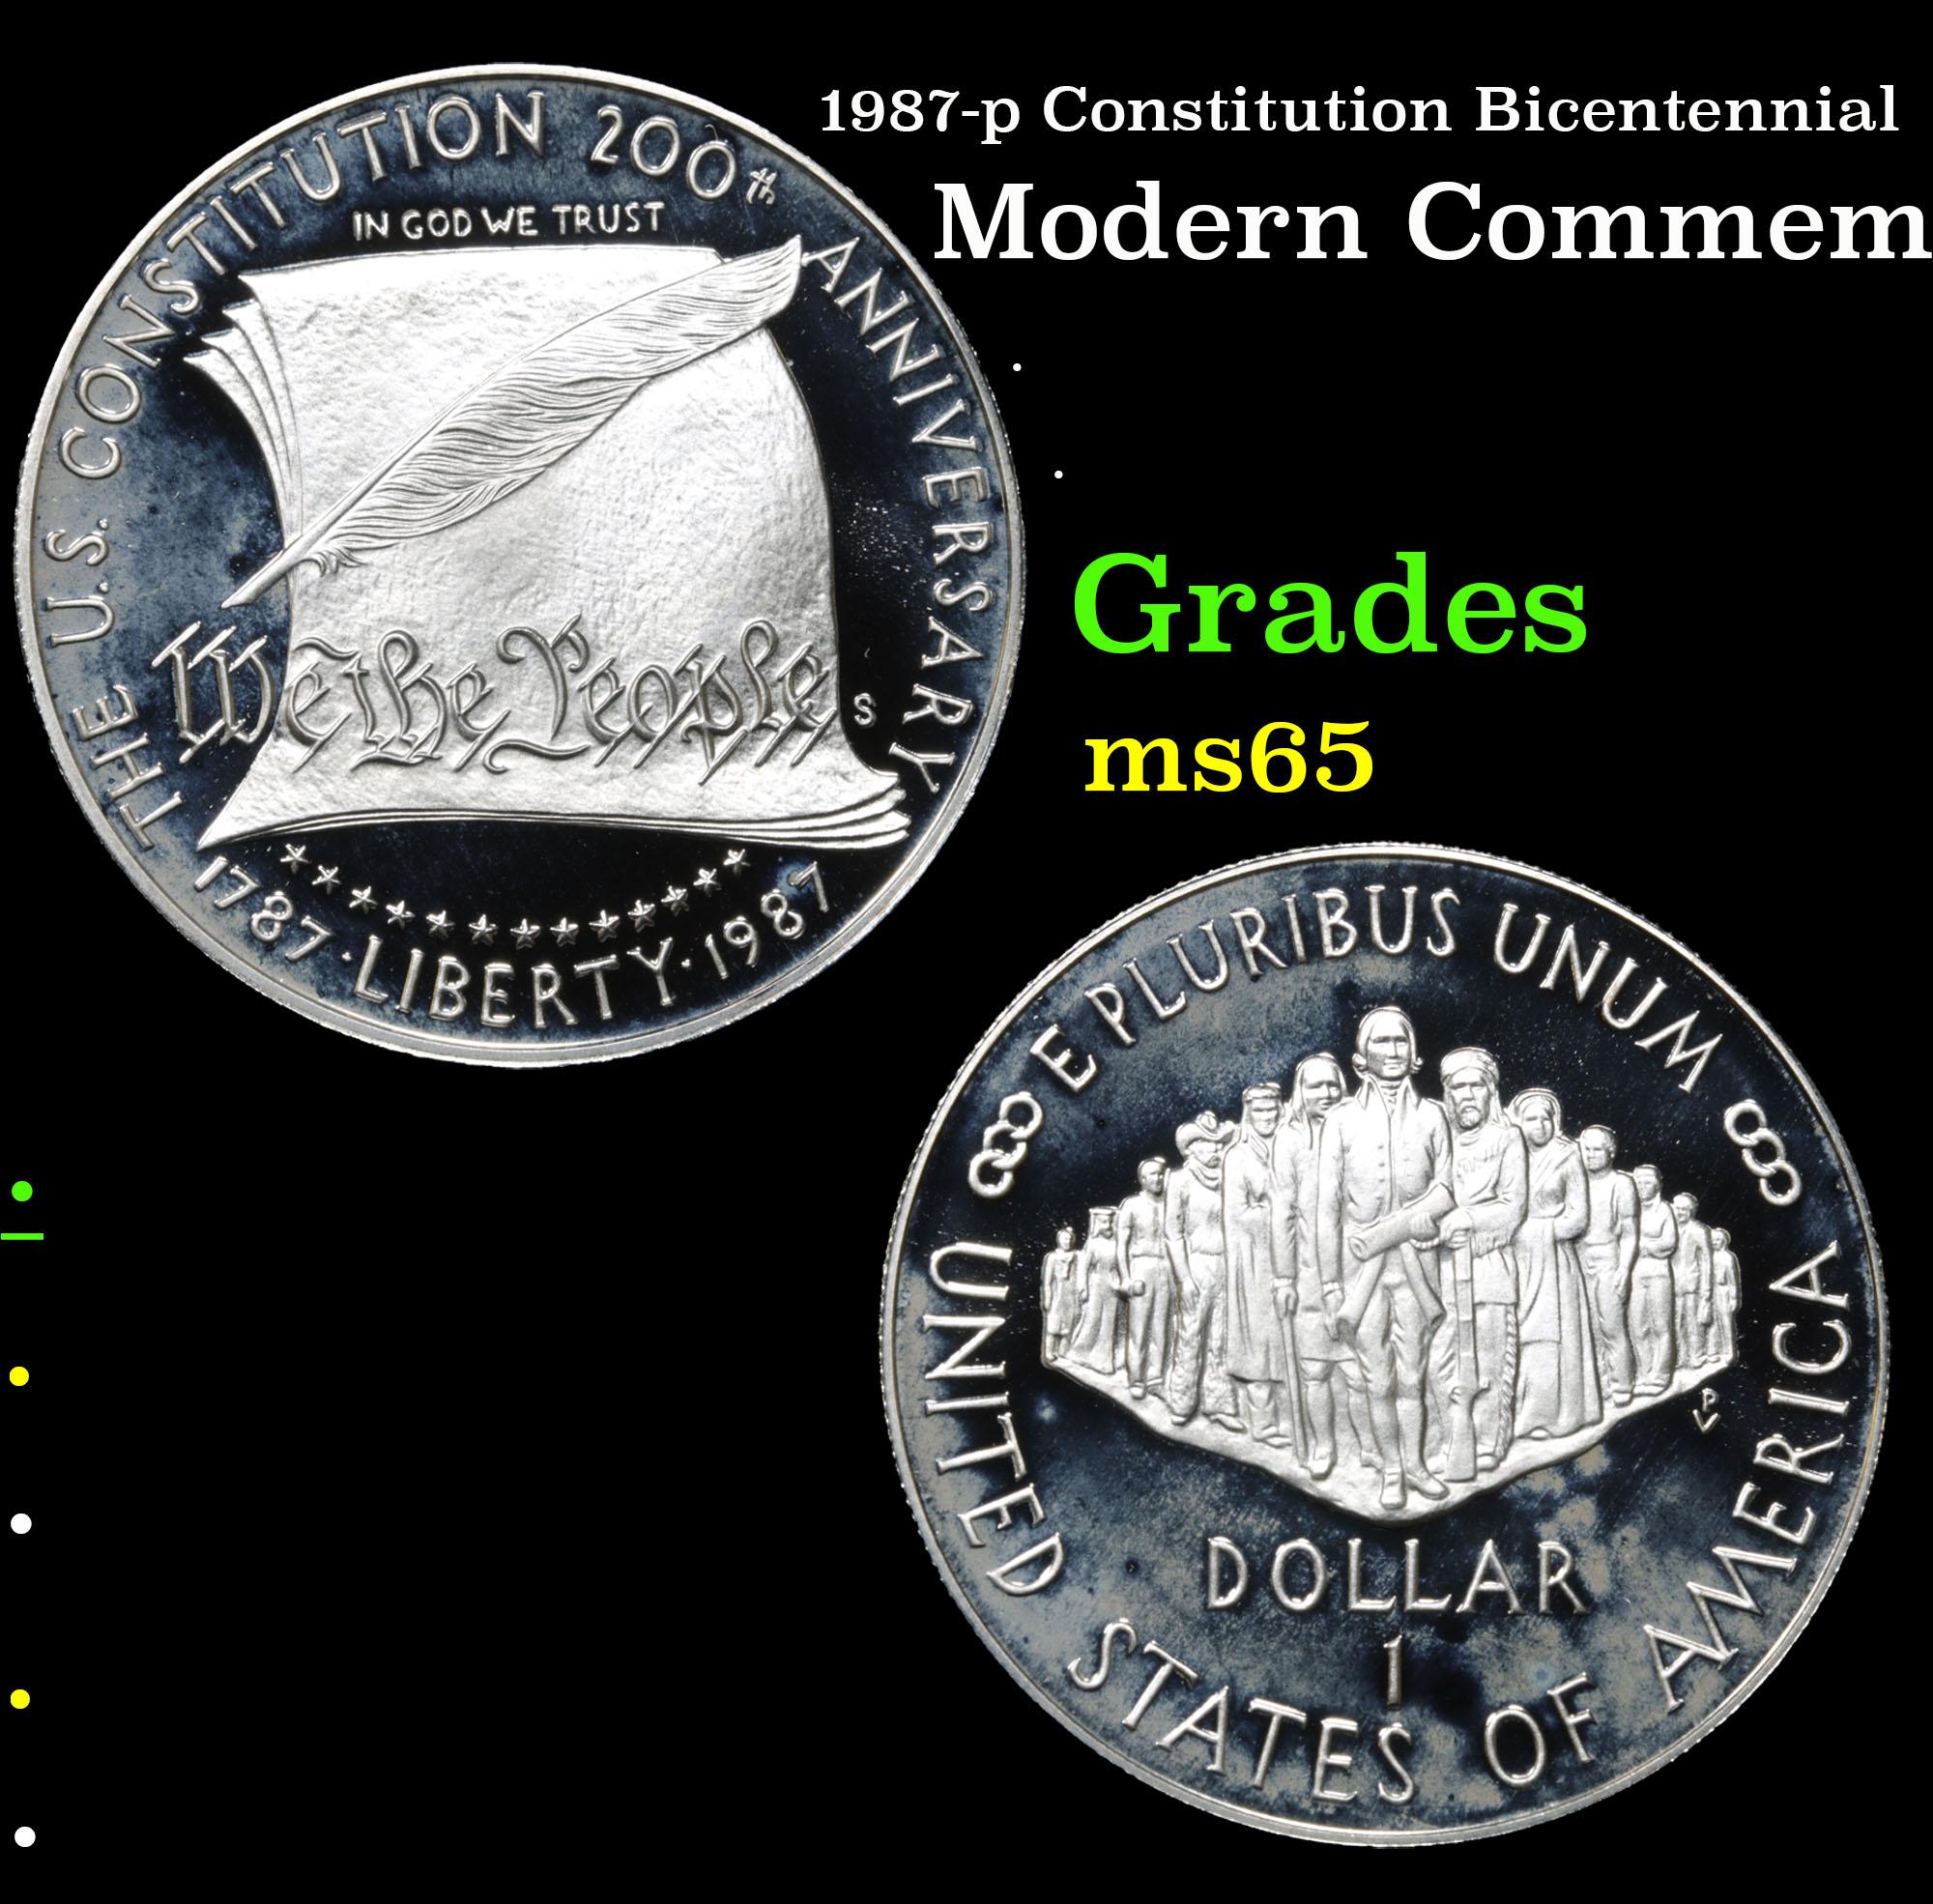 1987-p Constitution Bicentennial Modern Commem Dollar $1 Grades GEM Unc